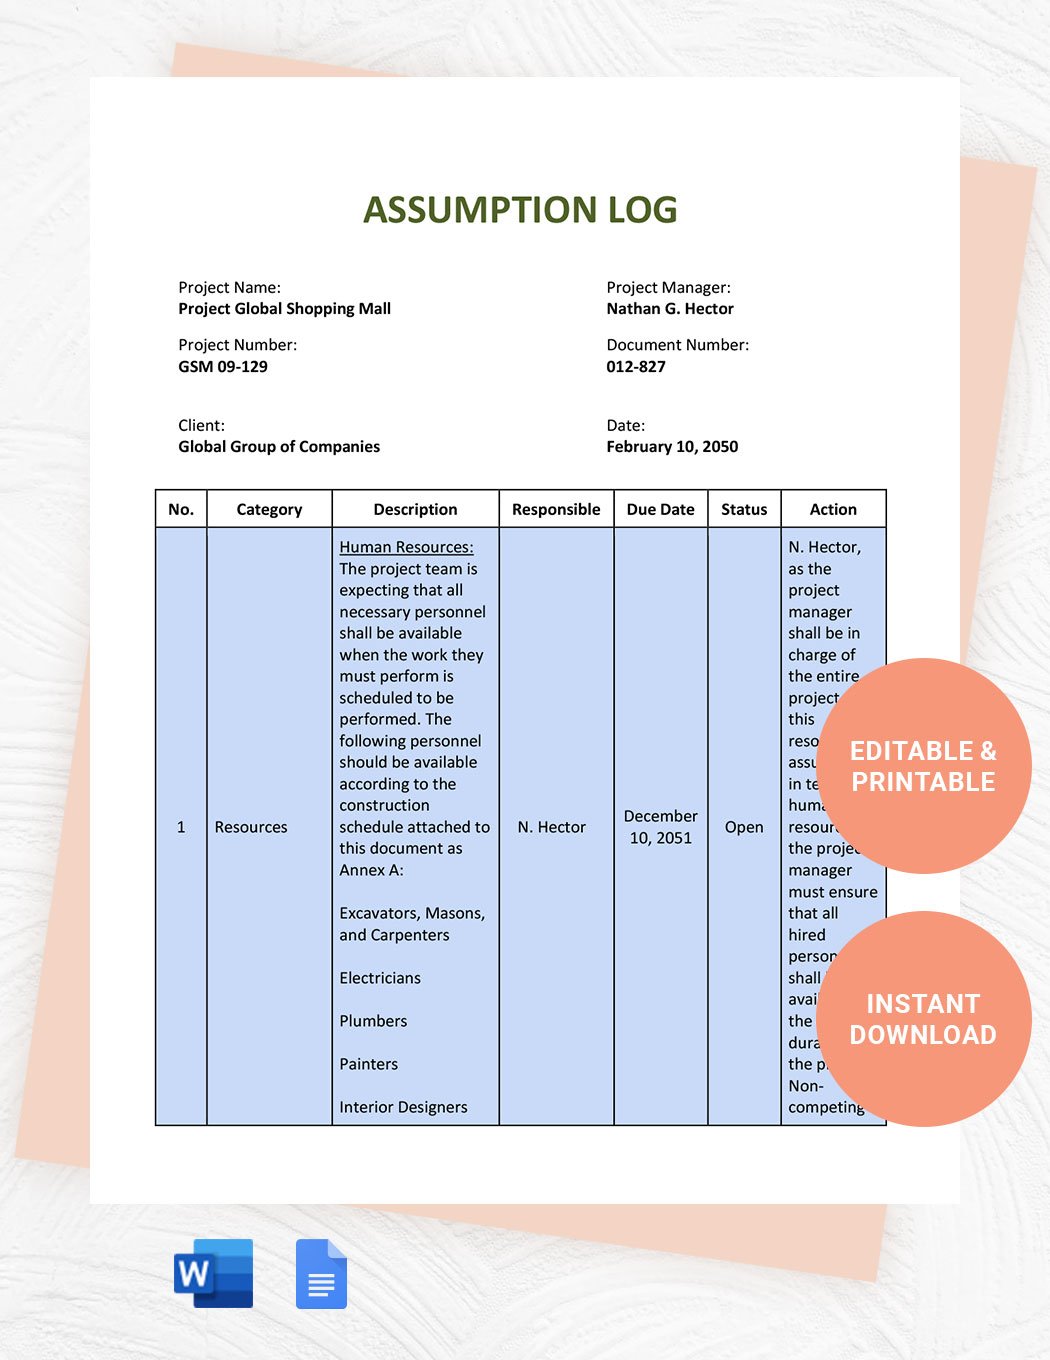 Assumptions Tracking Log Template